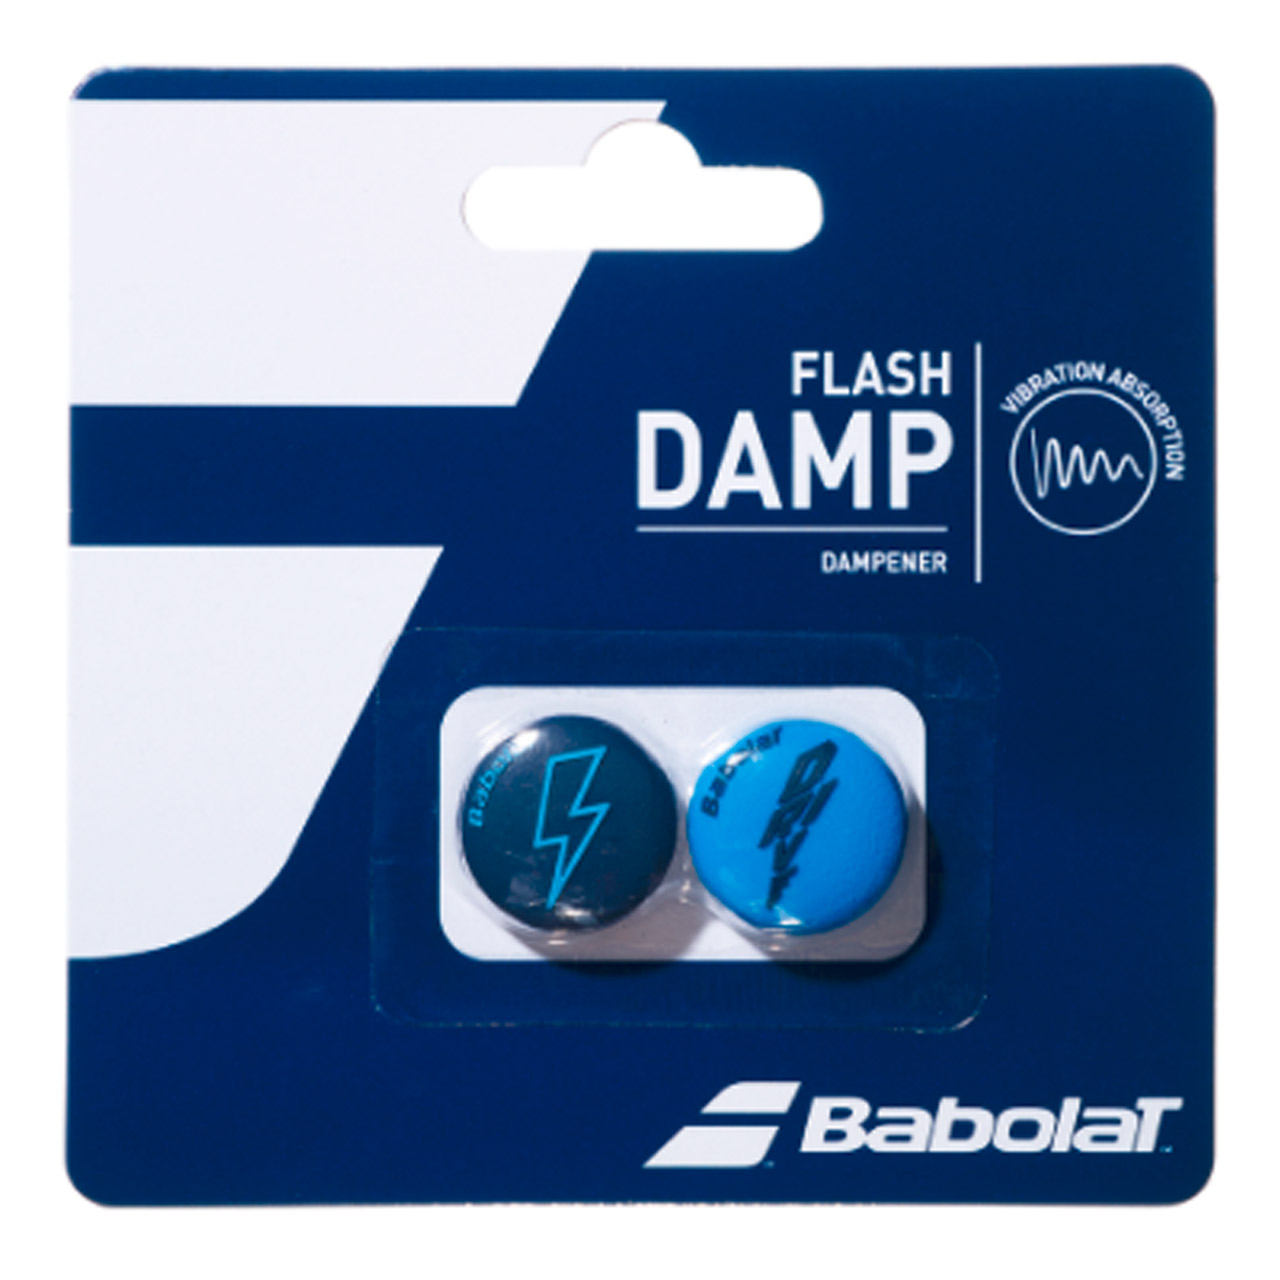 Vibrationsdämpfer Flash Damp X2 